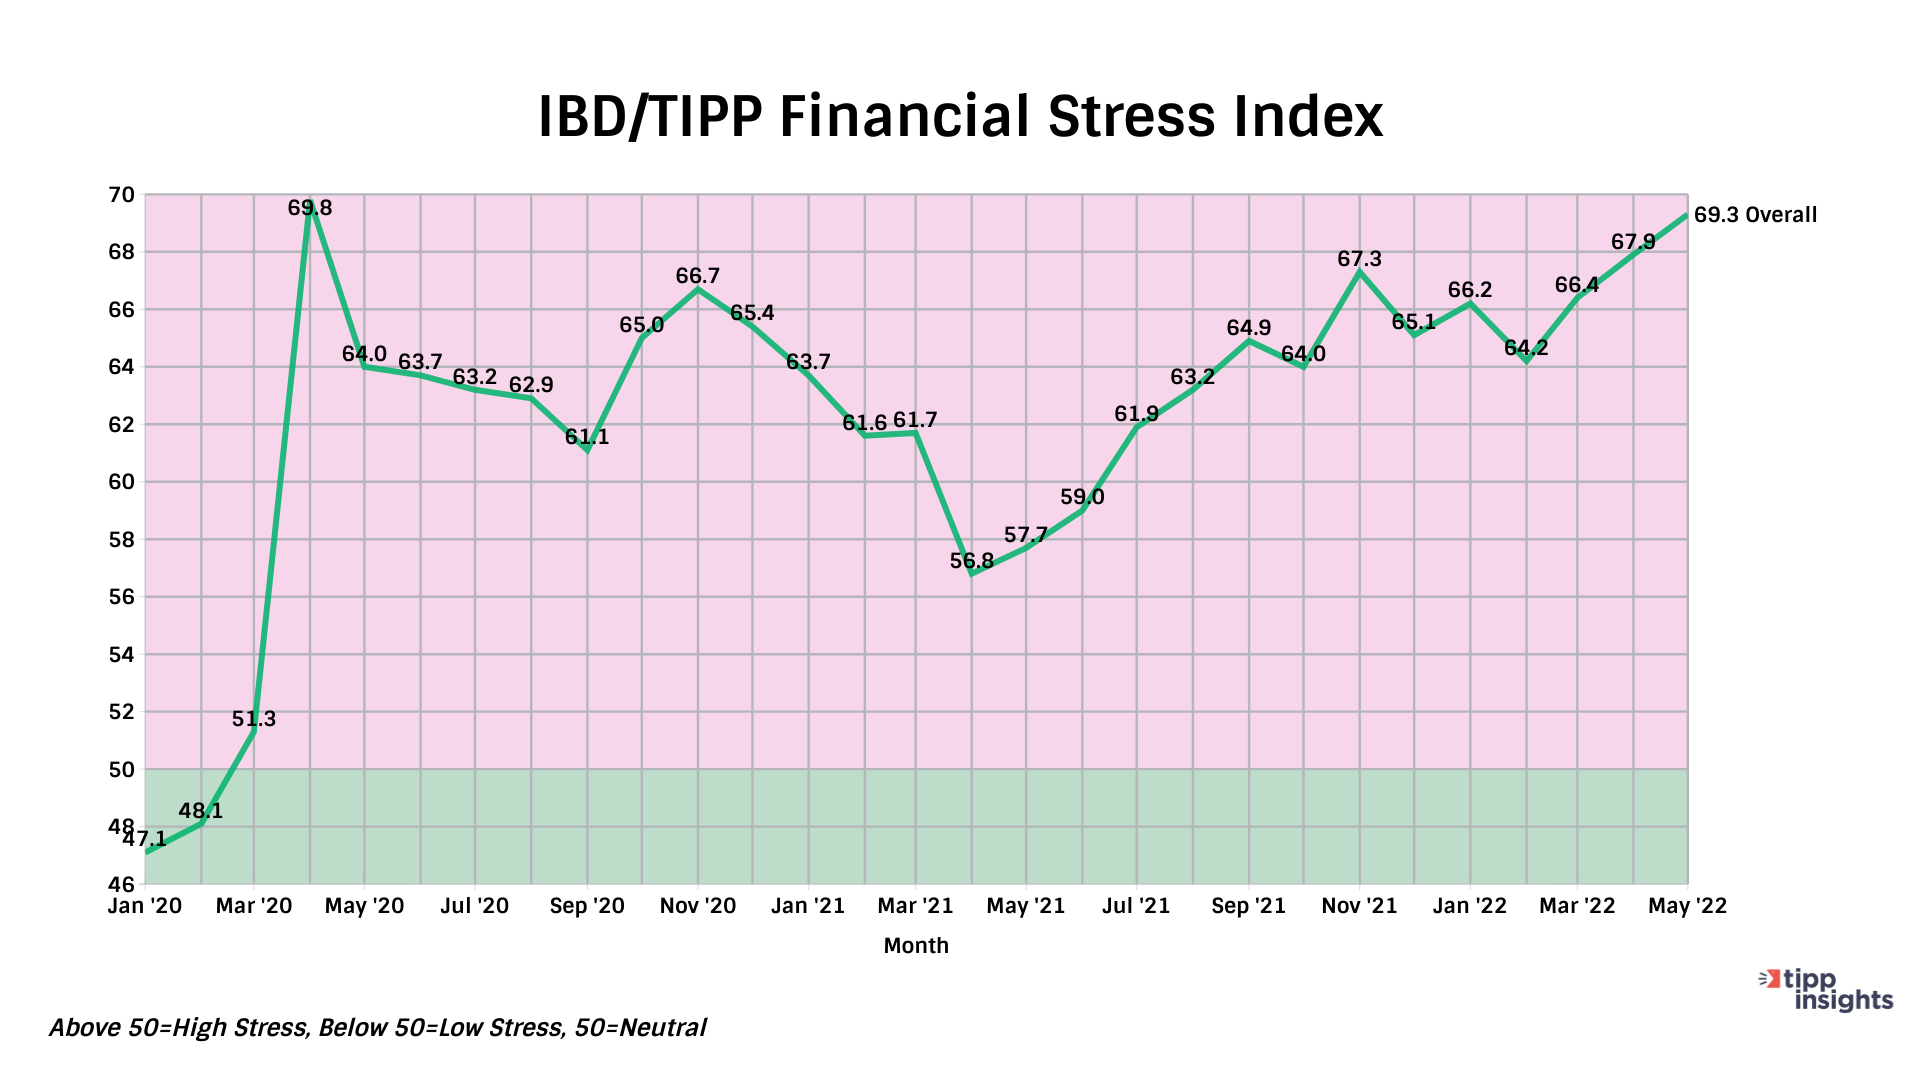 IBD/TIPP Financial Stress index January 2020 - May 2022